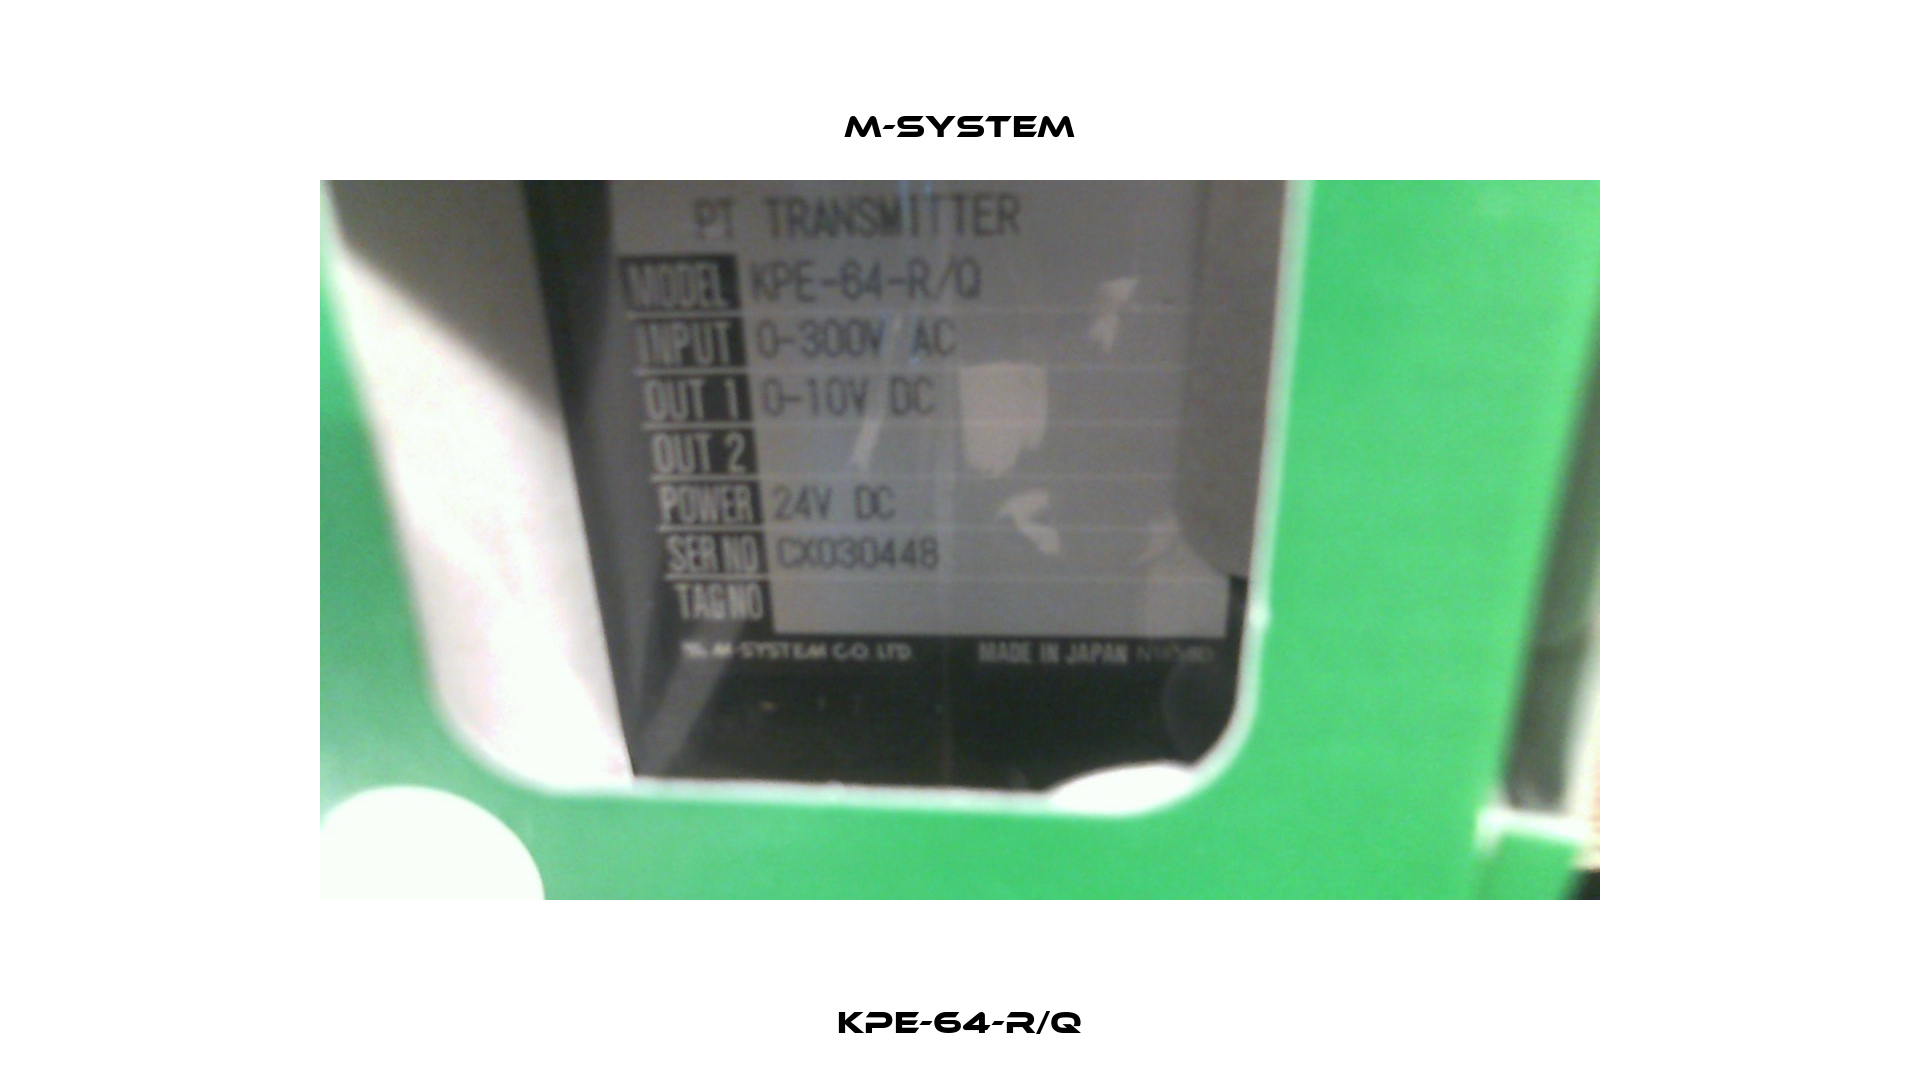 KPE-64-R/Q M-SYSTEM